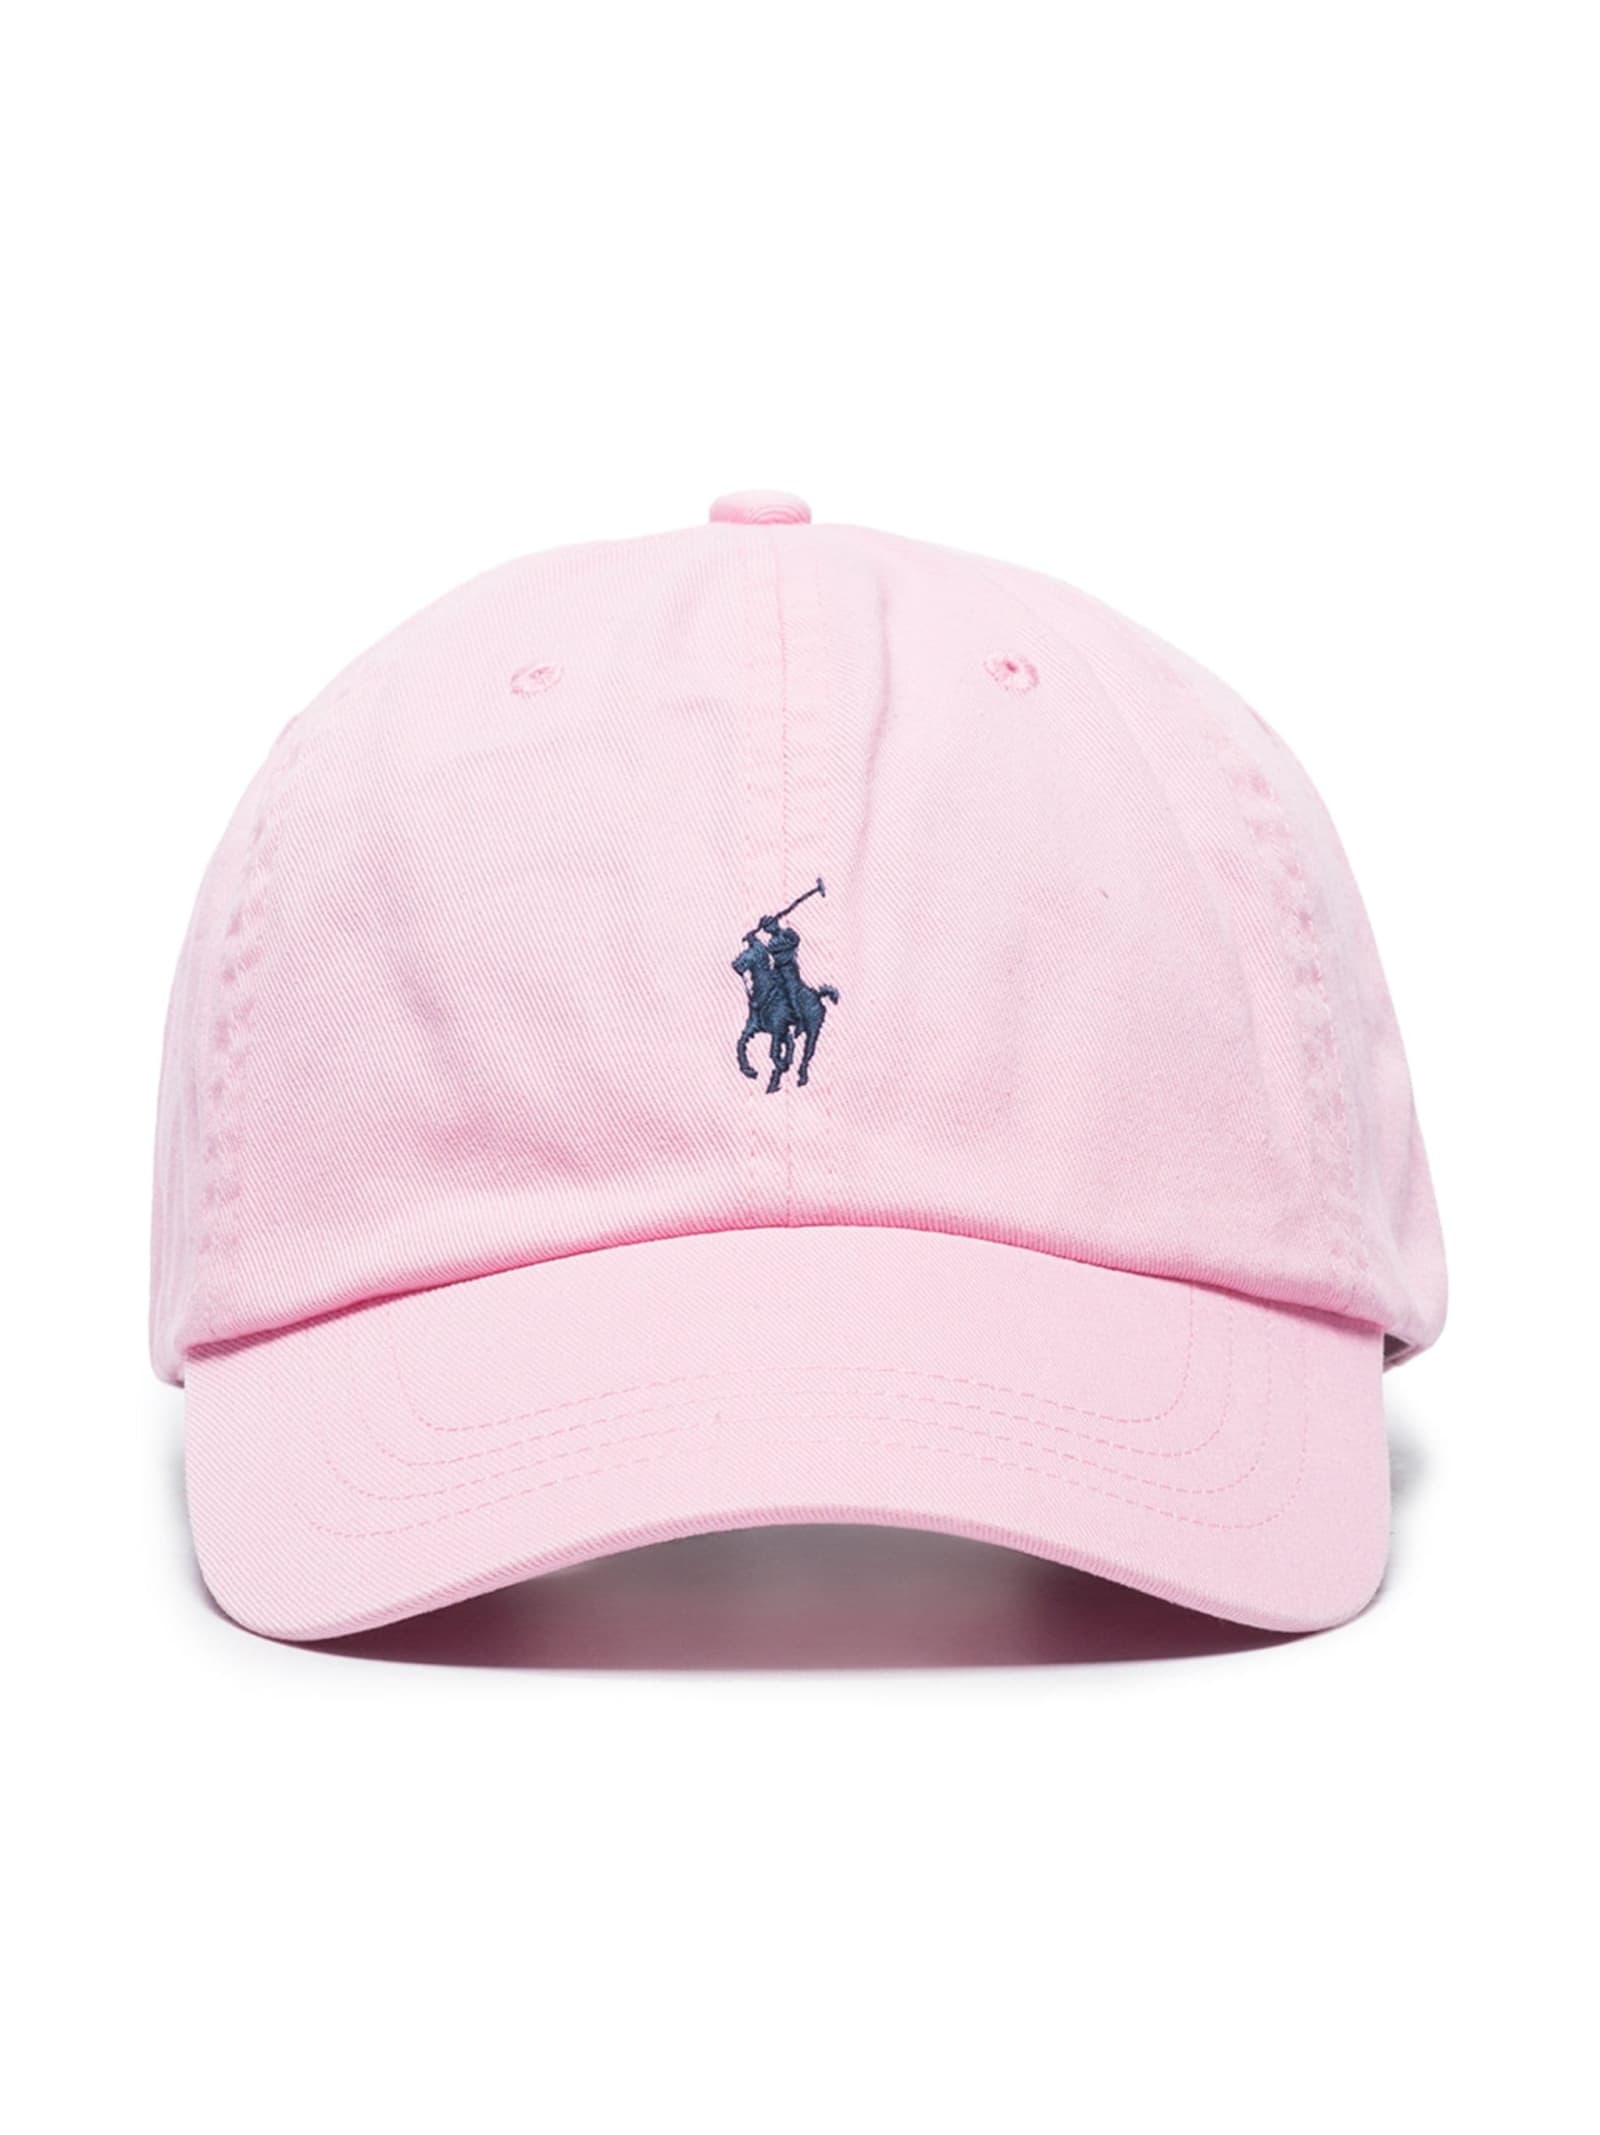 Ralph Lauren Pink Baseball Hat With Blue Pony